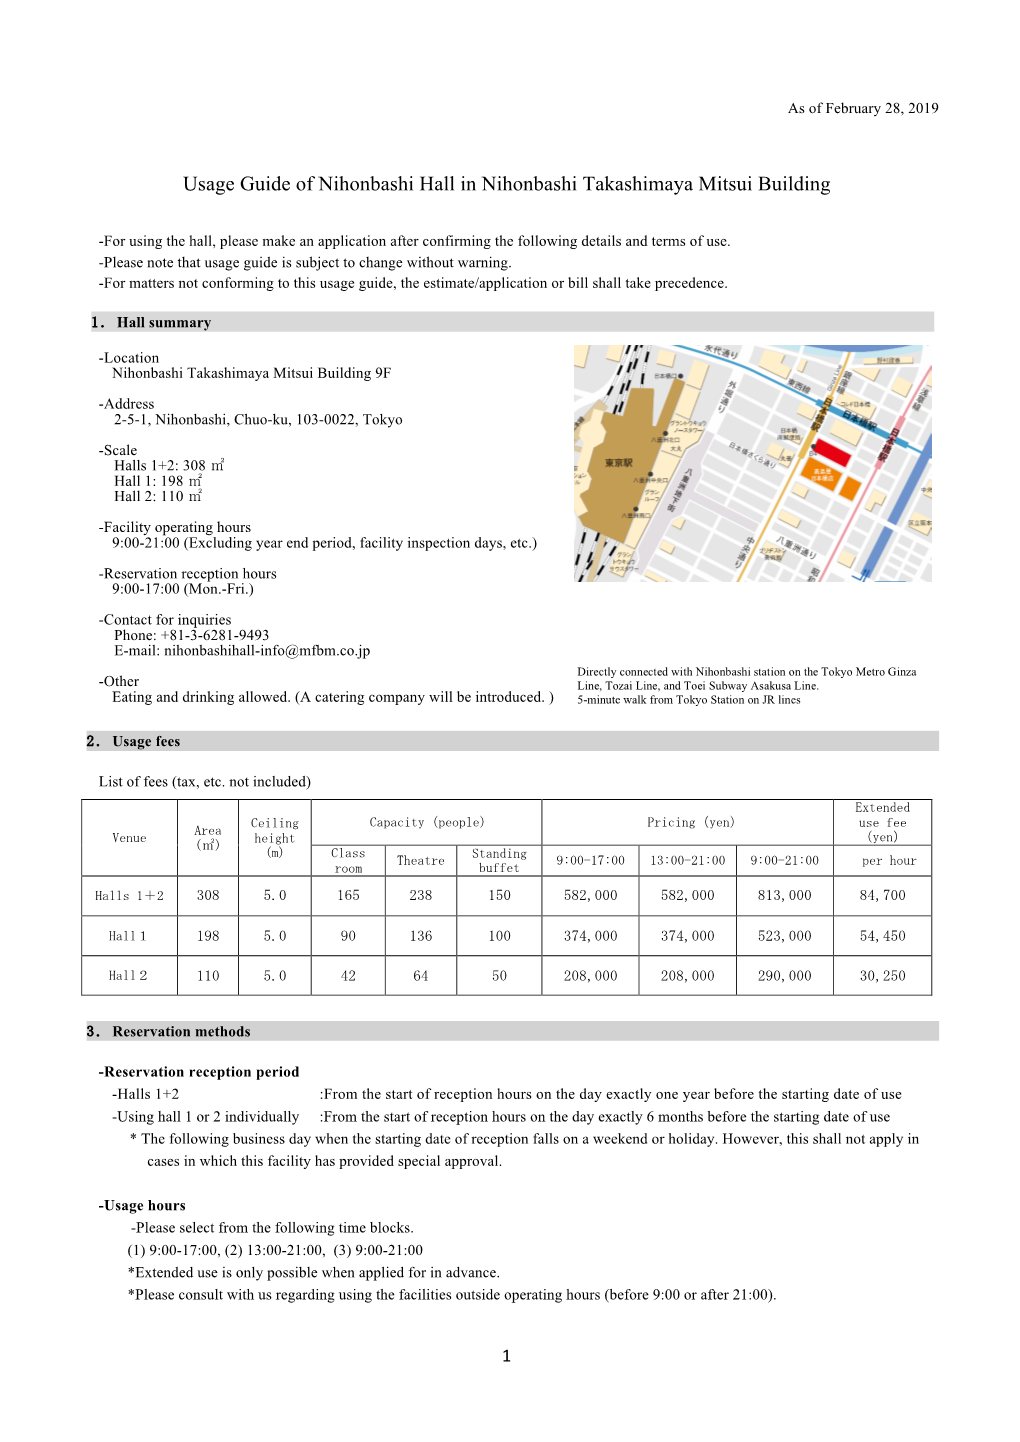 Usage Guide of Nihonbashi Hall in Nihonbashi Takashimaya Mitsui Building